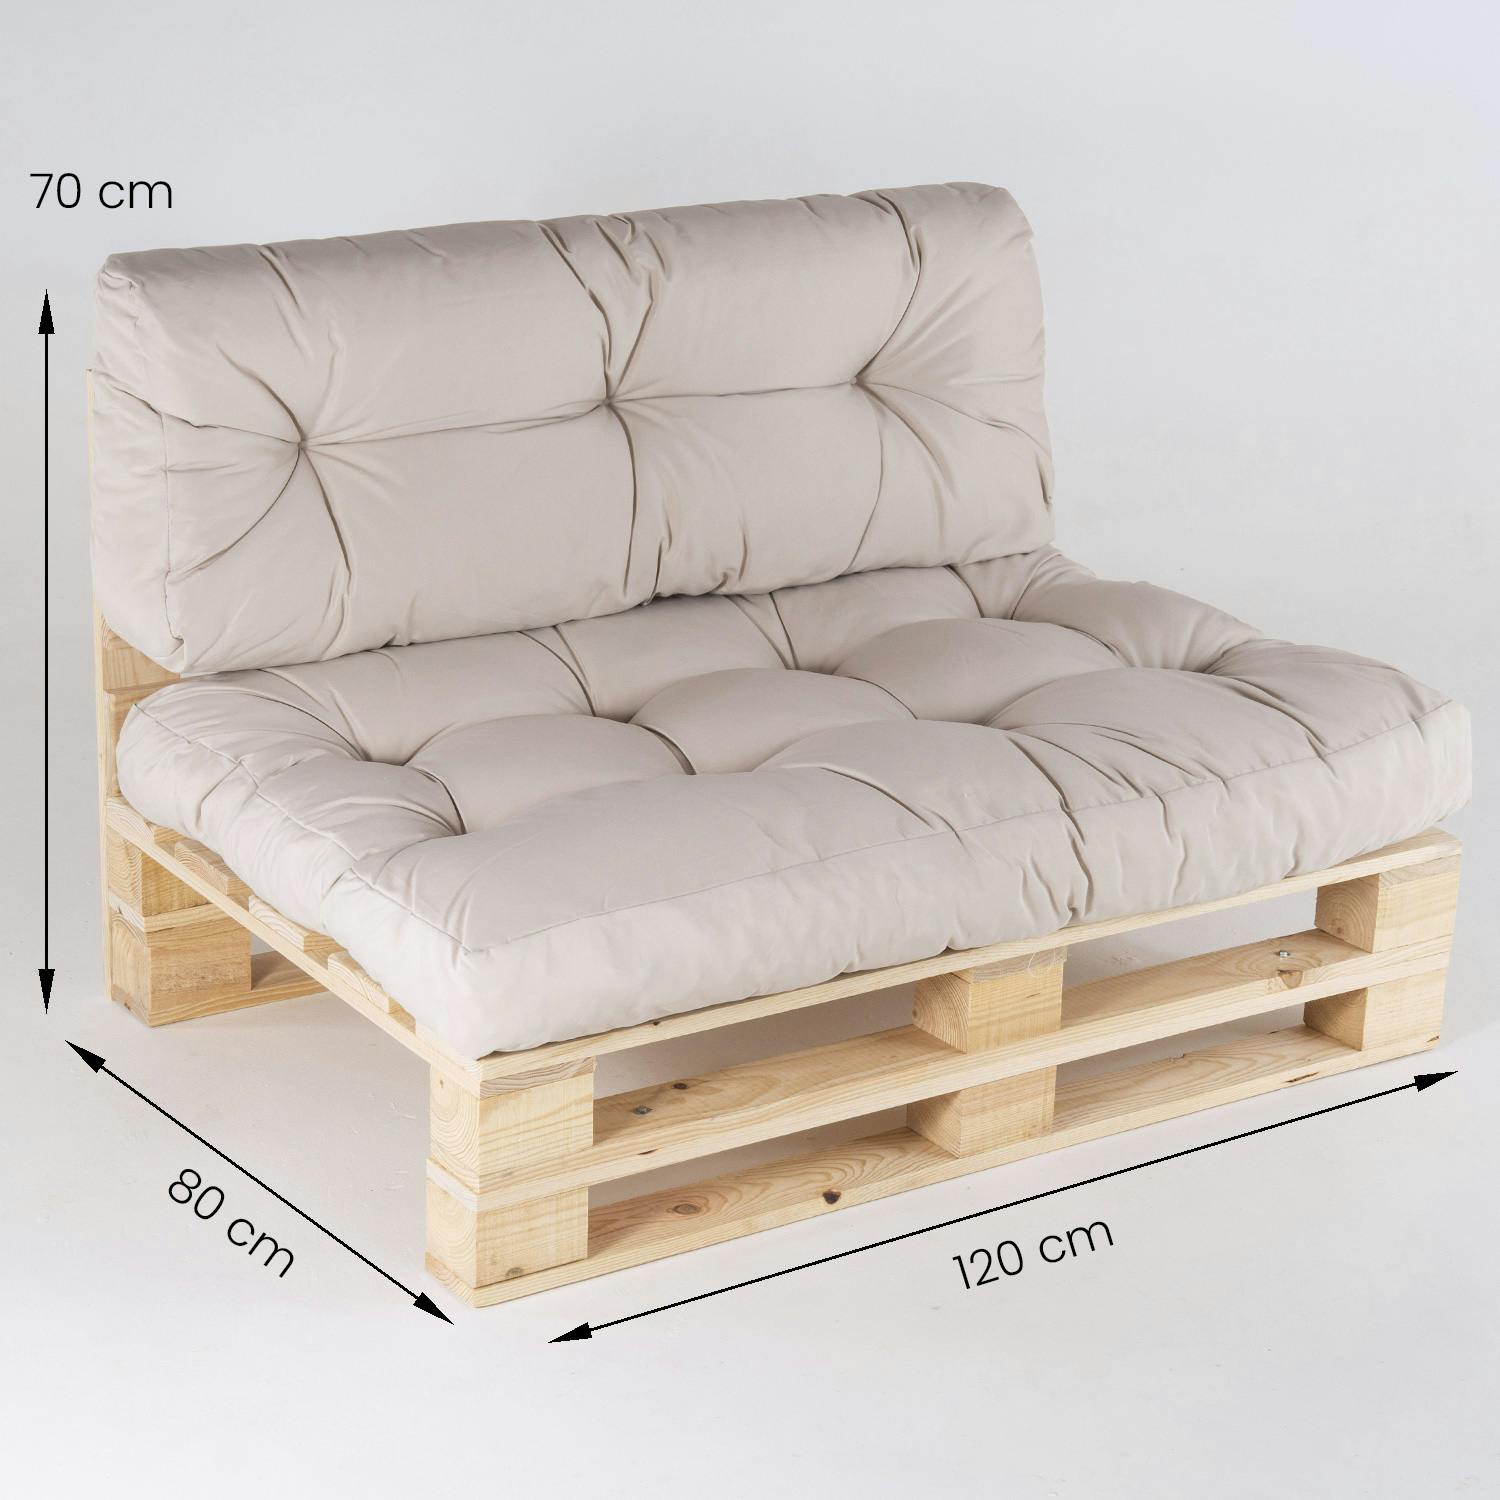 Pack 4 sofás para palets + 4 cojín de asiento 80x120x16 cm + 4 cojín  respaldo 42x120x16 cm, Color crema, Repelente al agua | MAKRO Marketplace